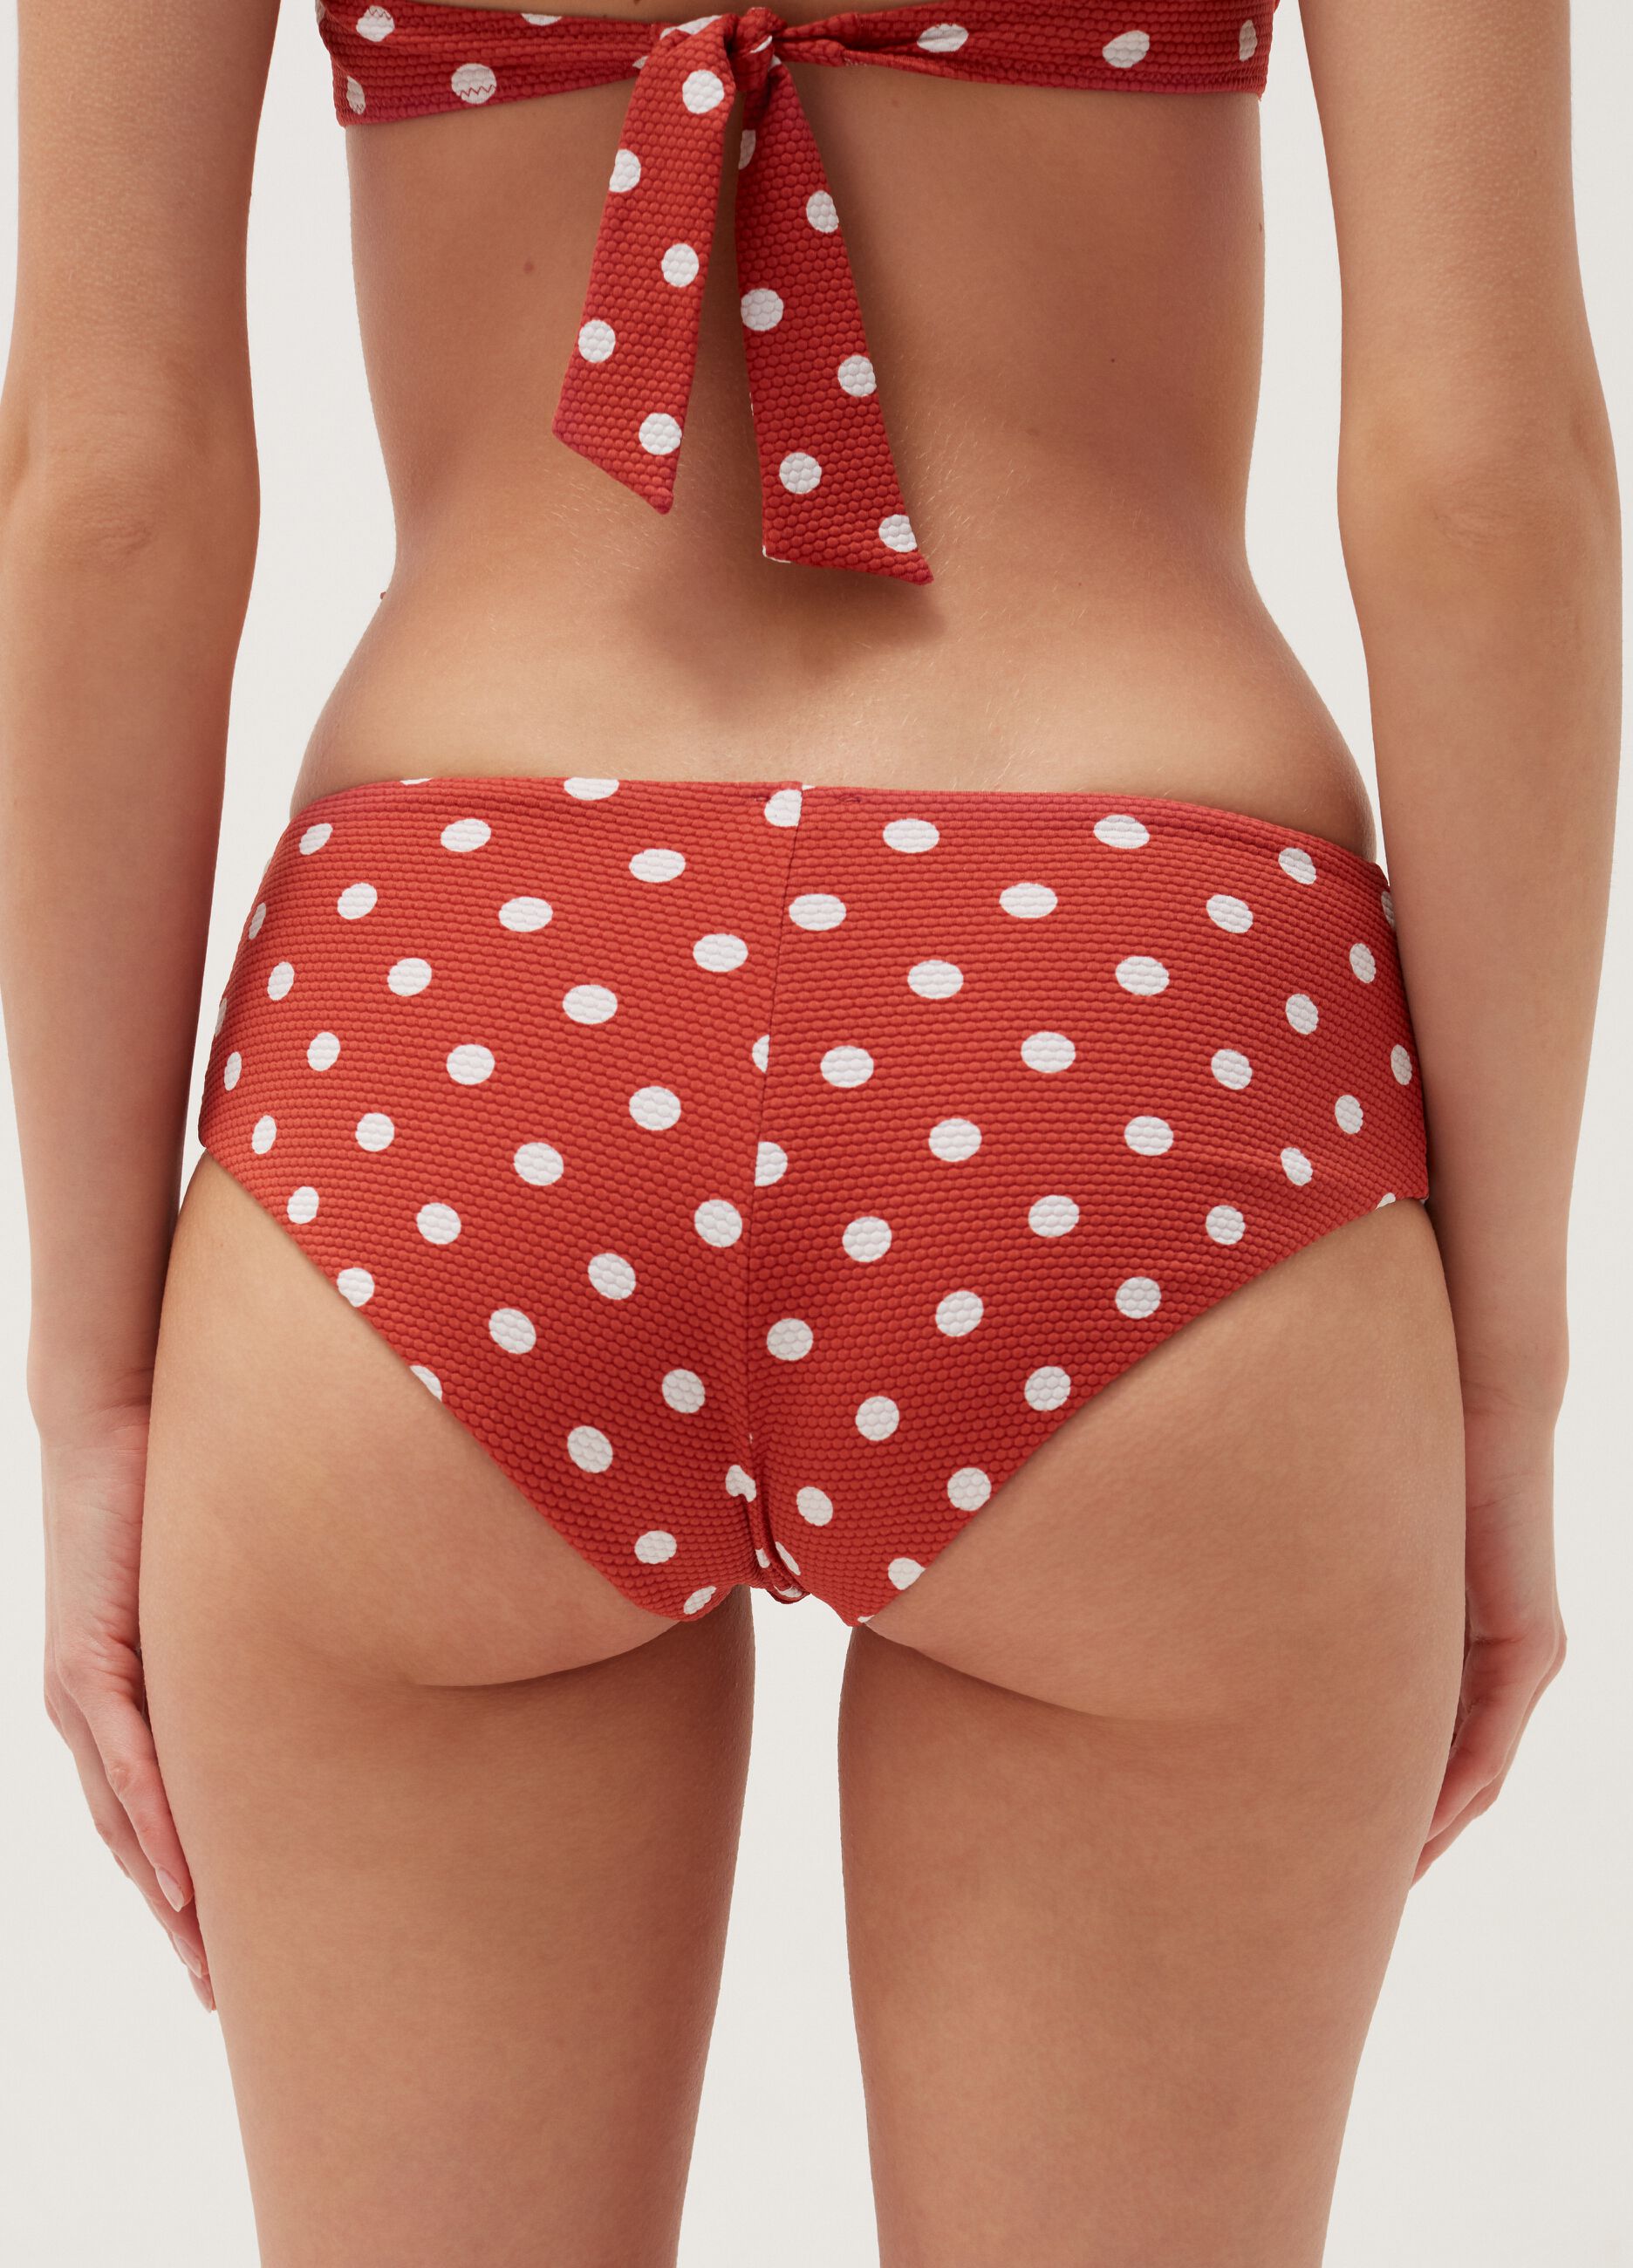 Bikini briefs with polka dots